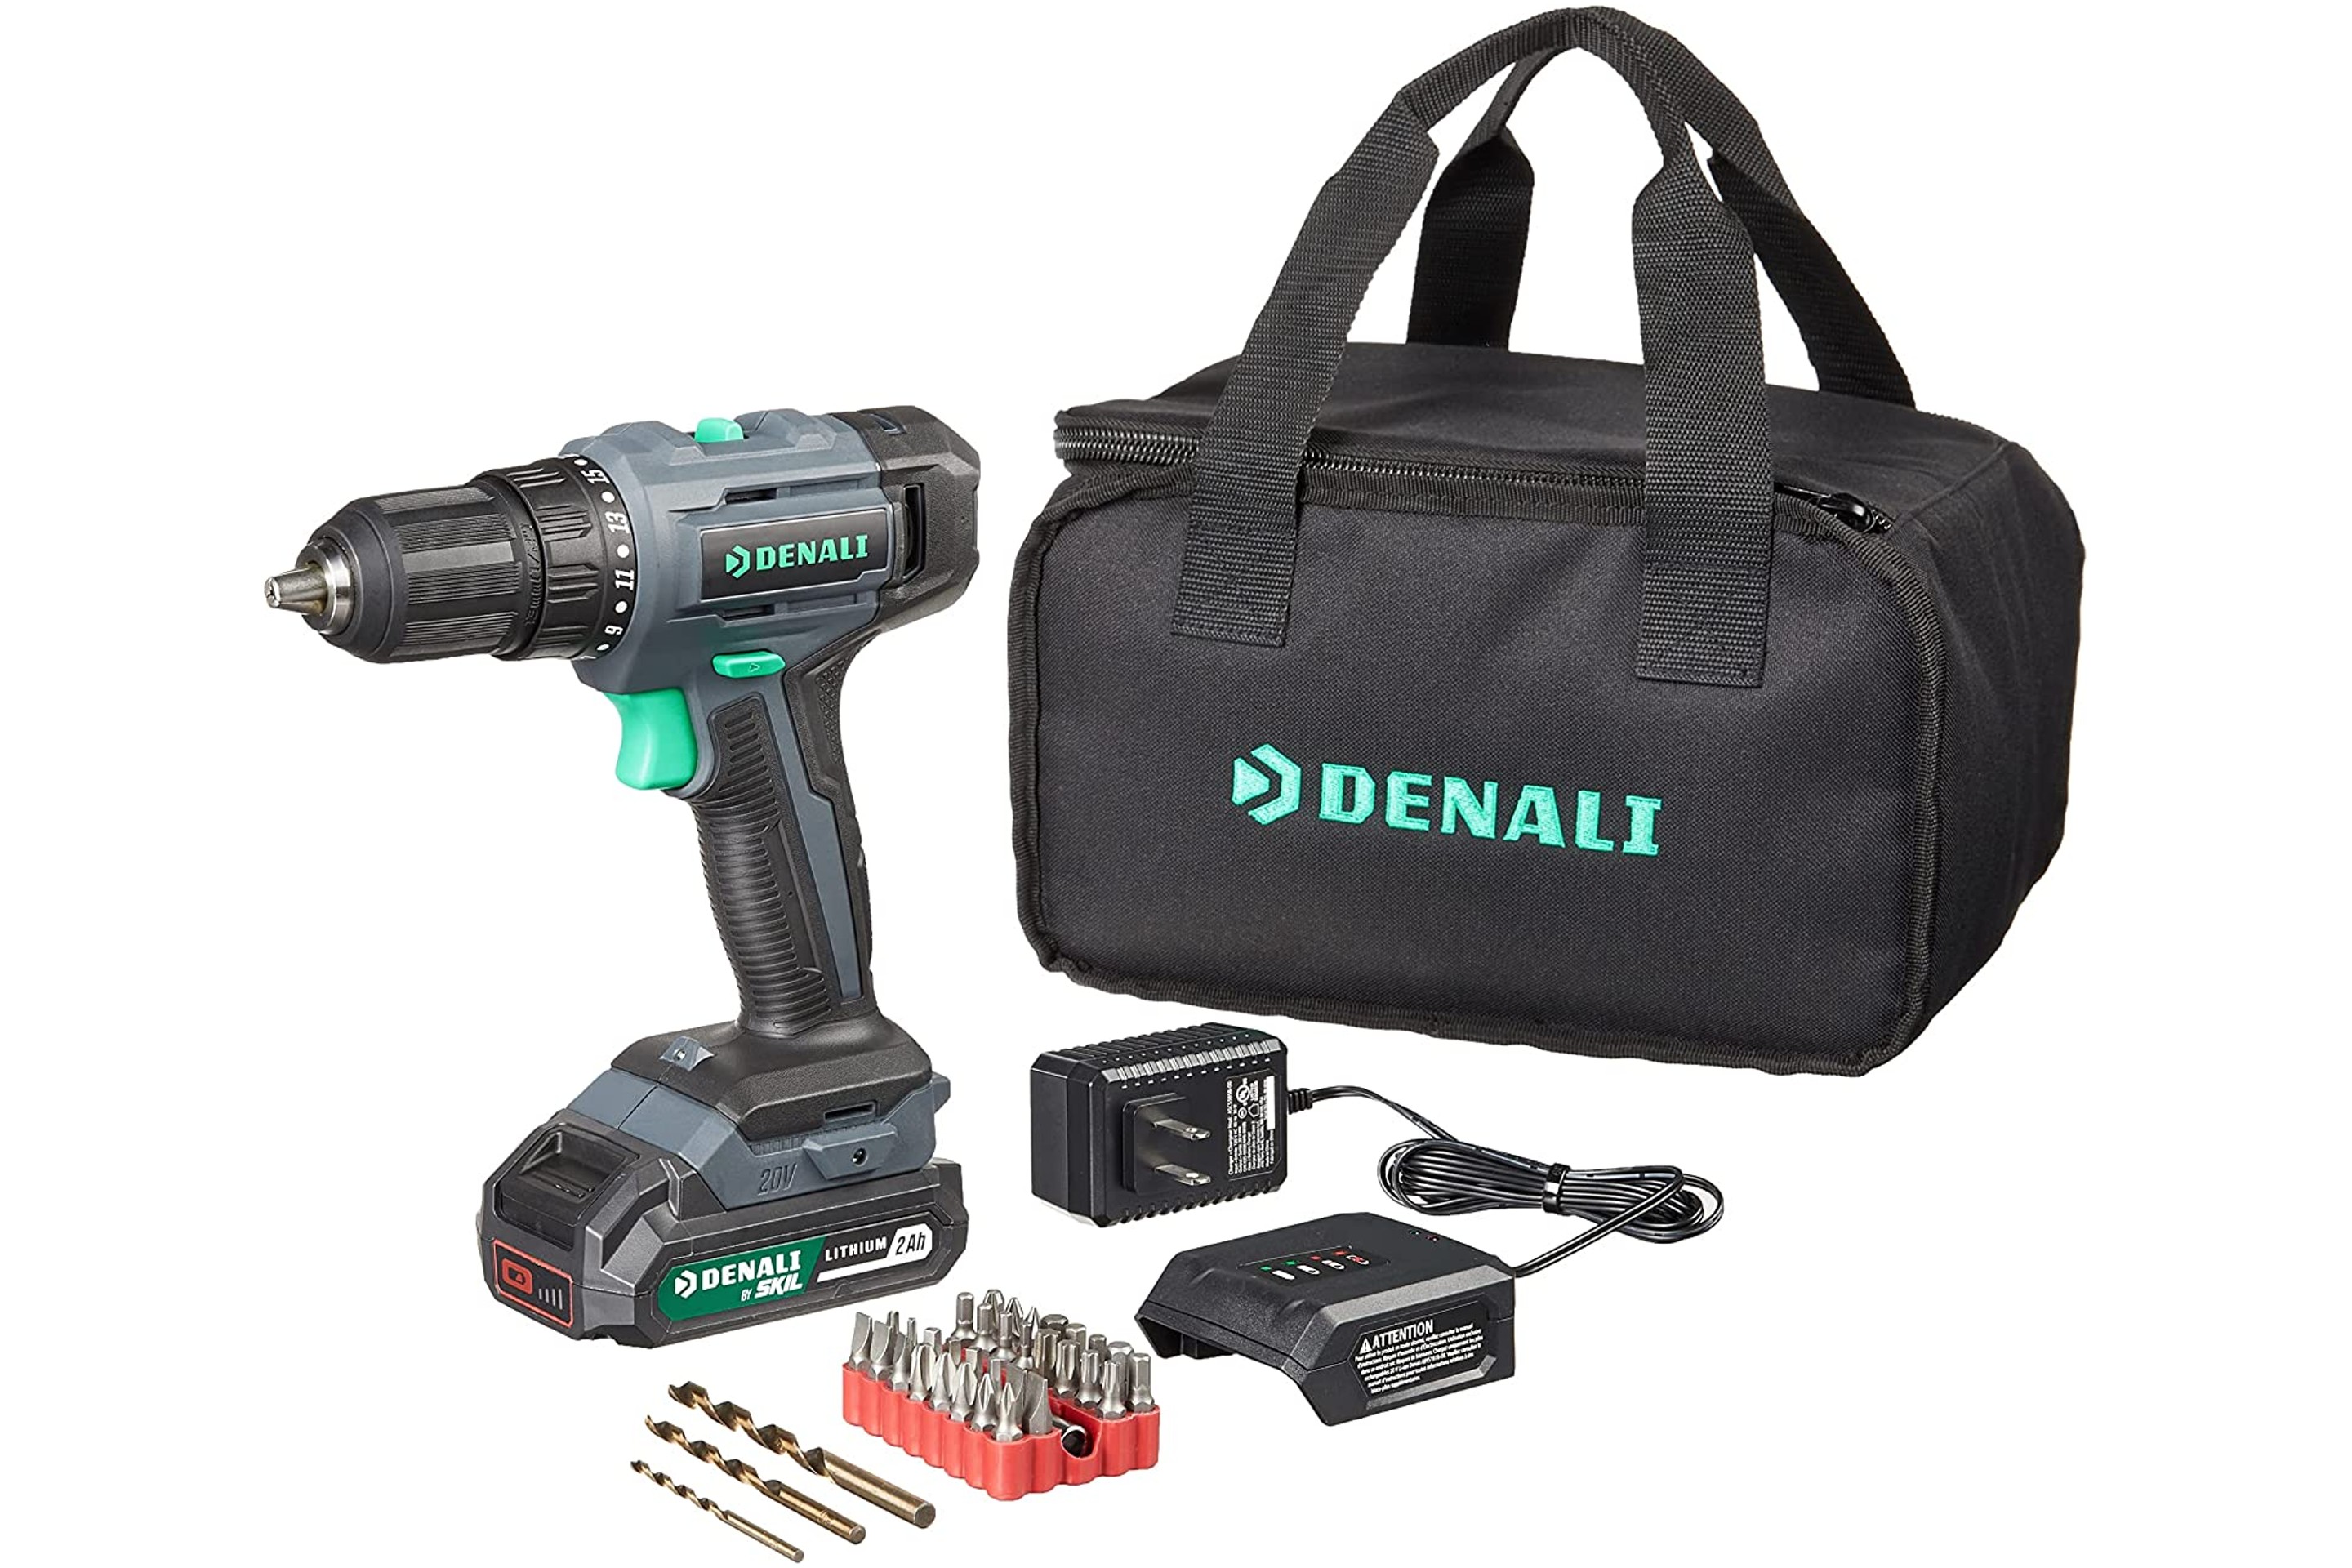 Denali by SKIL 20V Cordless Drill Driver Kit